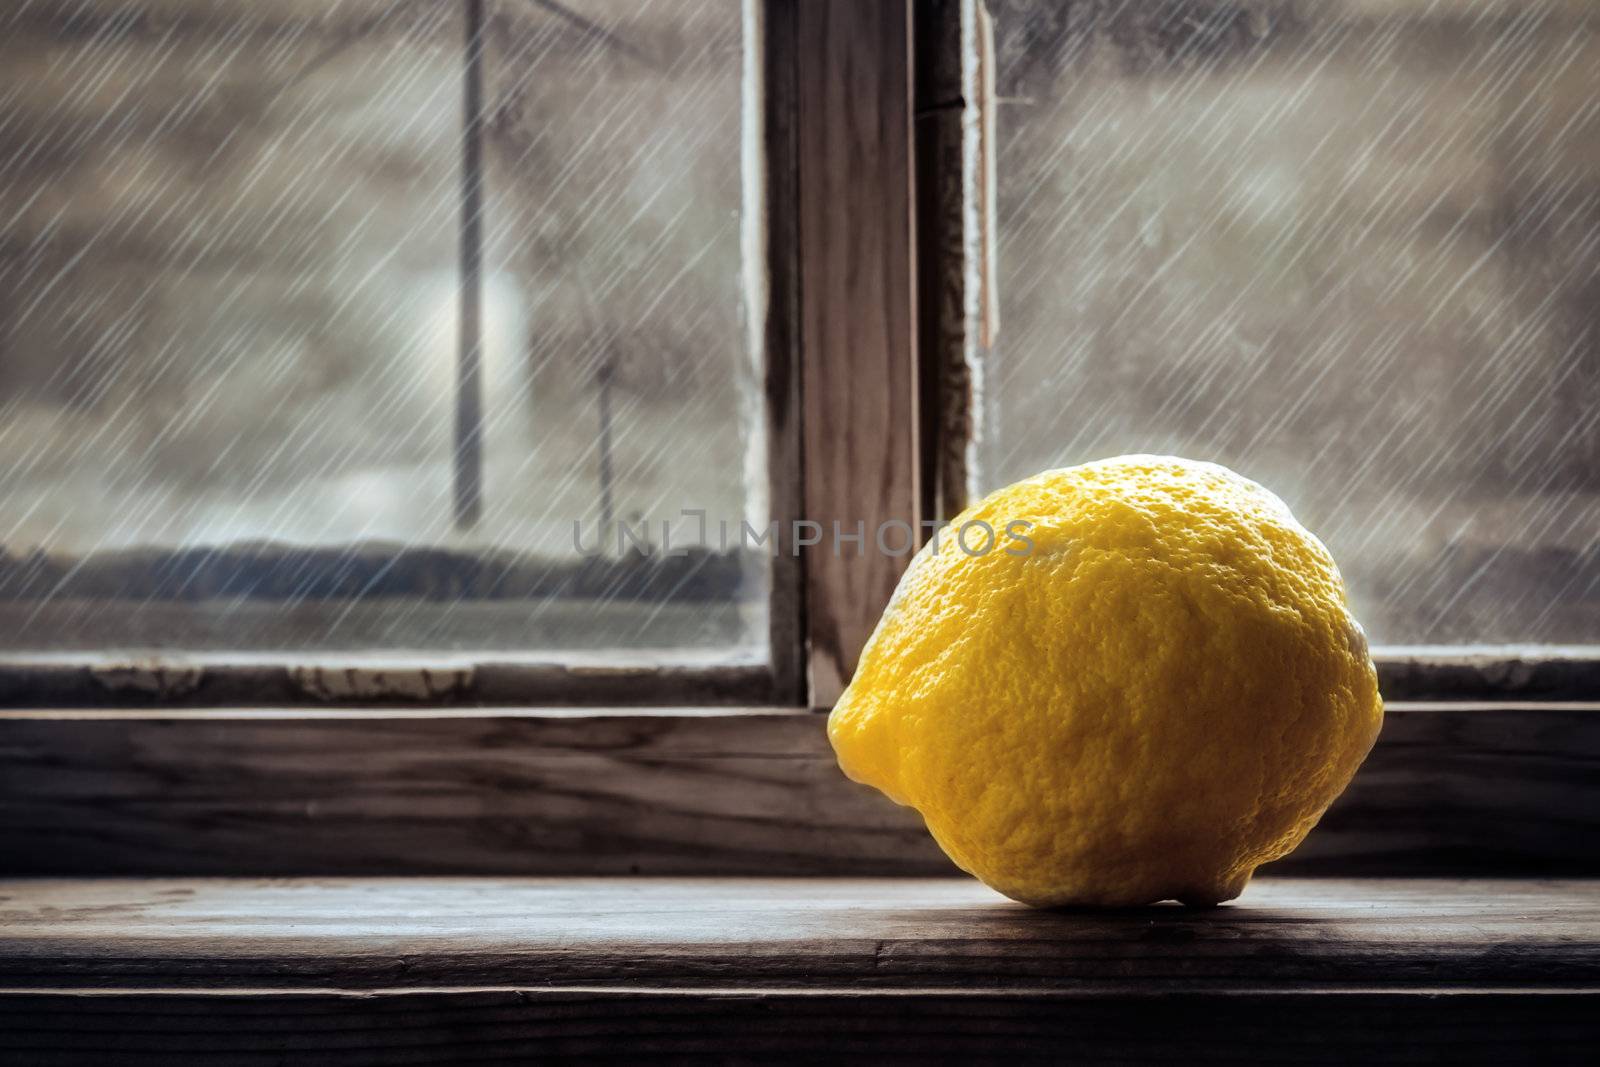 Lemon on the window by silent47